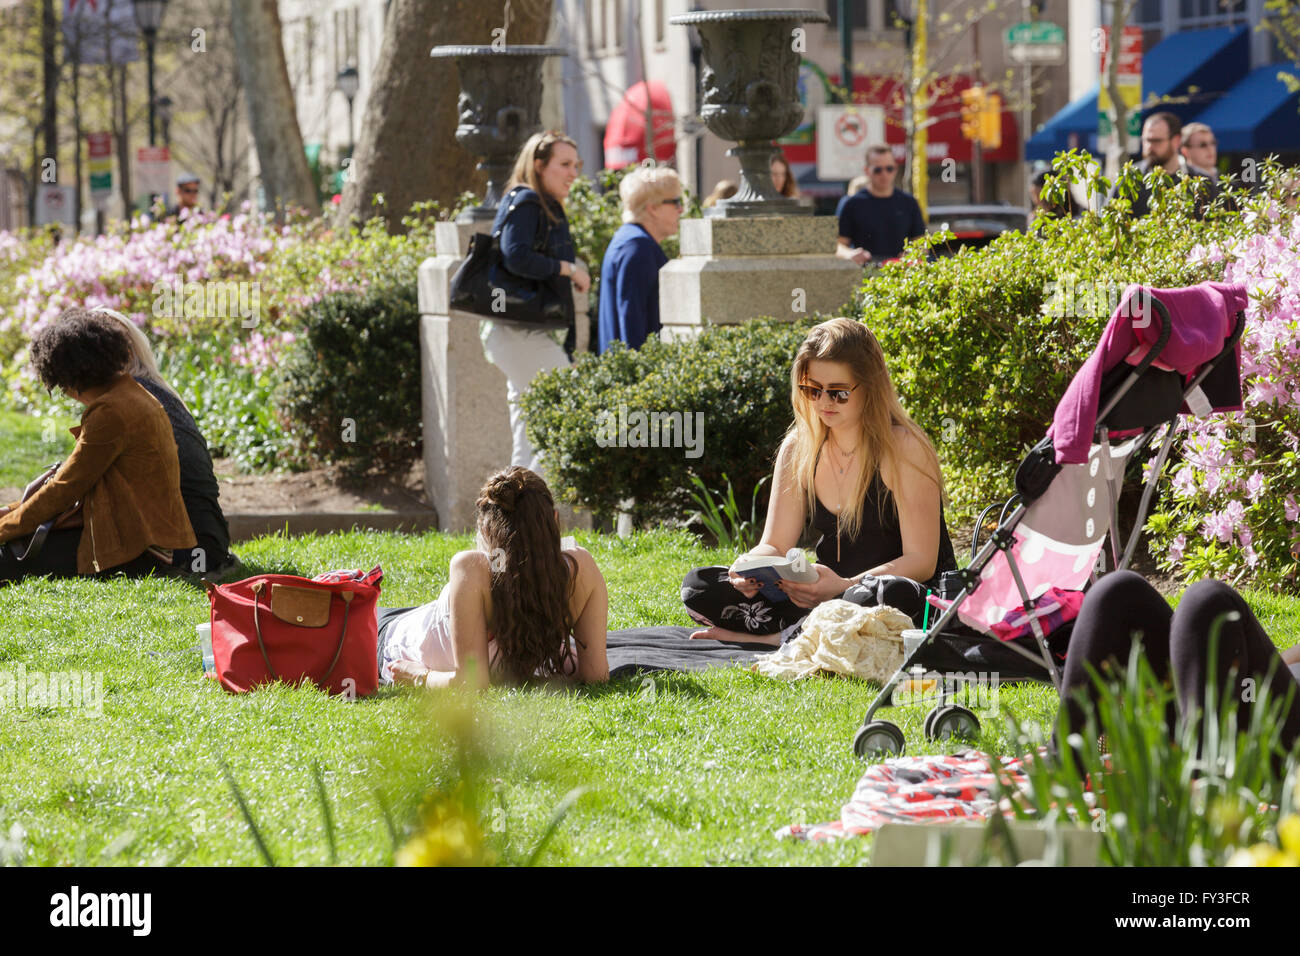 Crowds flock to Rittenhouse Square on a fine spring day, Philadelphia, Pennsylvania, USA. Stock Photo